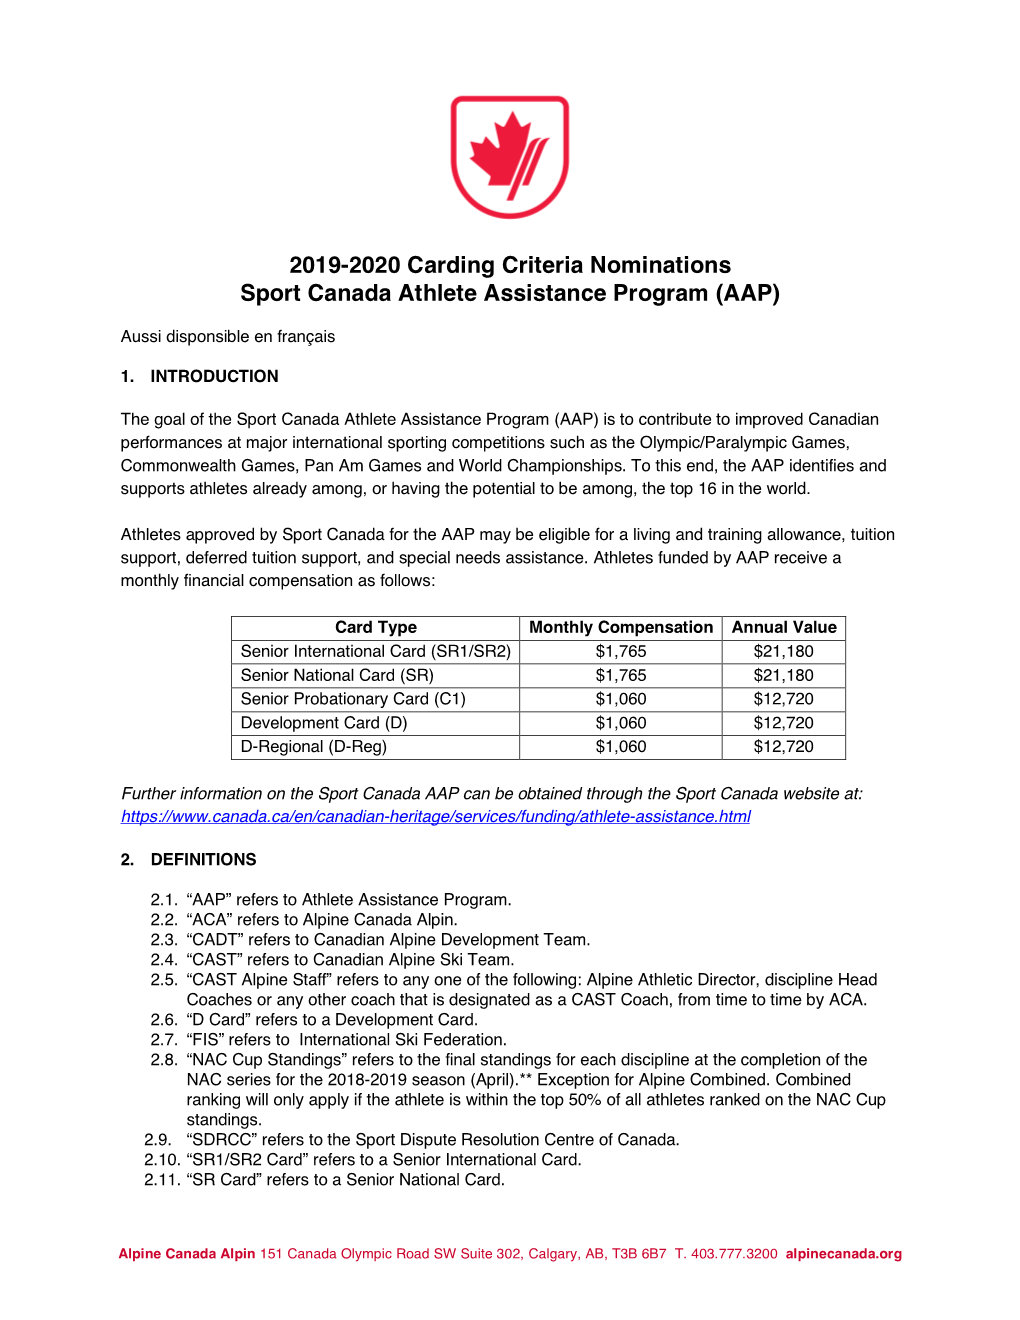 2019-2020 Carding Criteria Nominations Sport Canada Athlete Assistance Program (AAP)